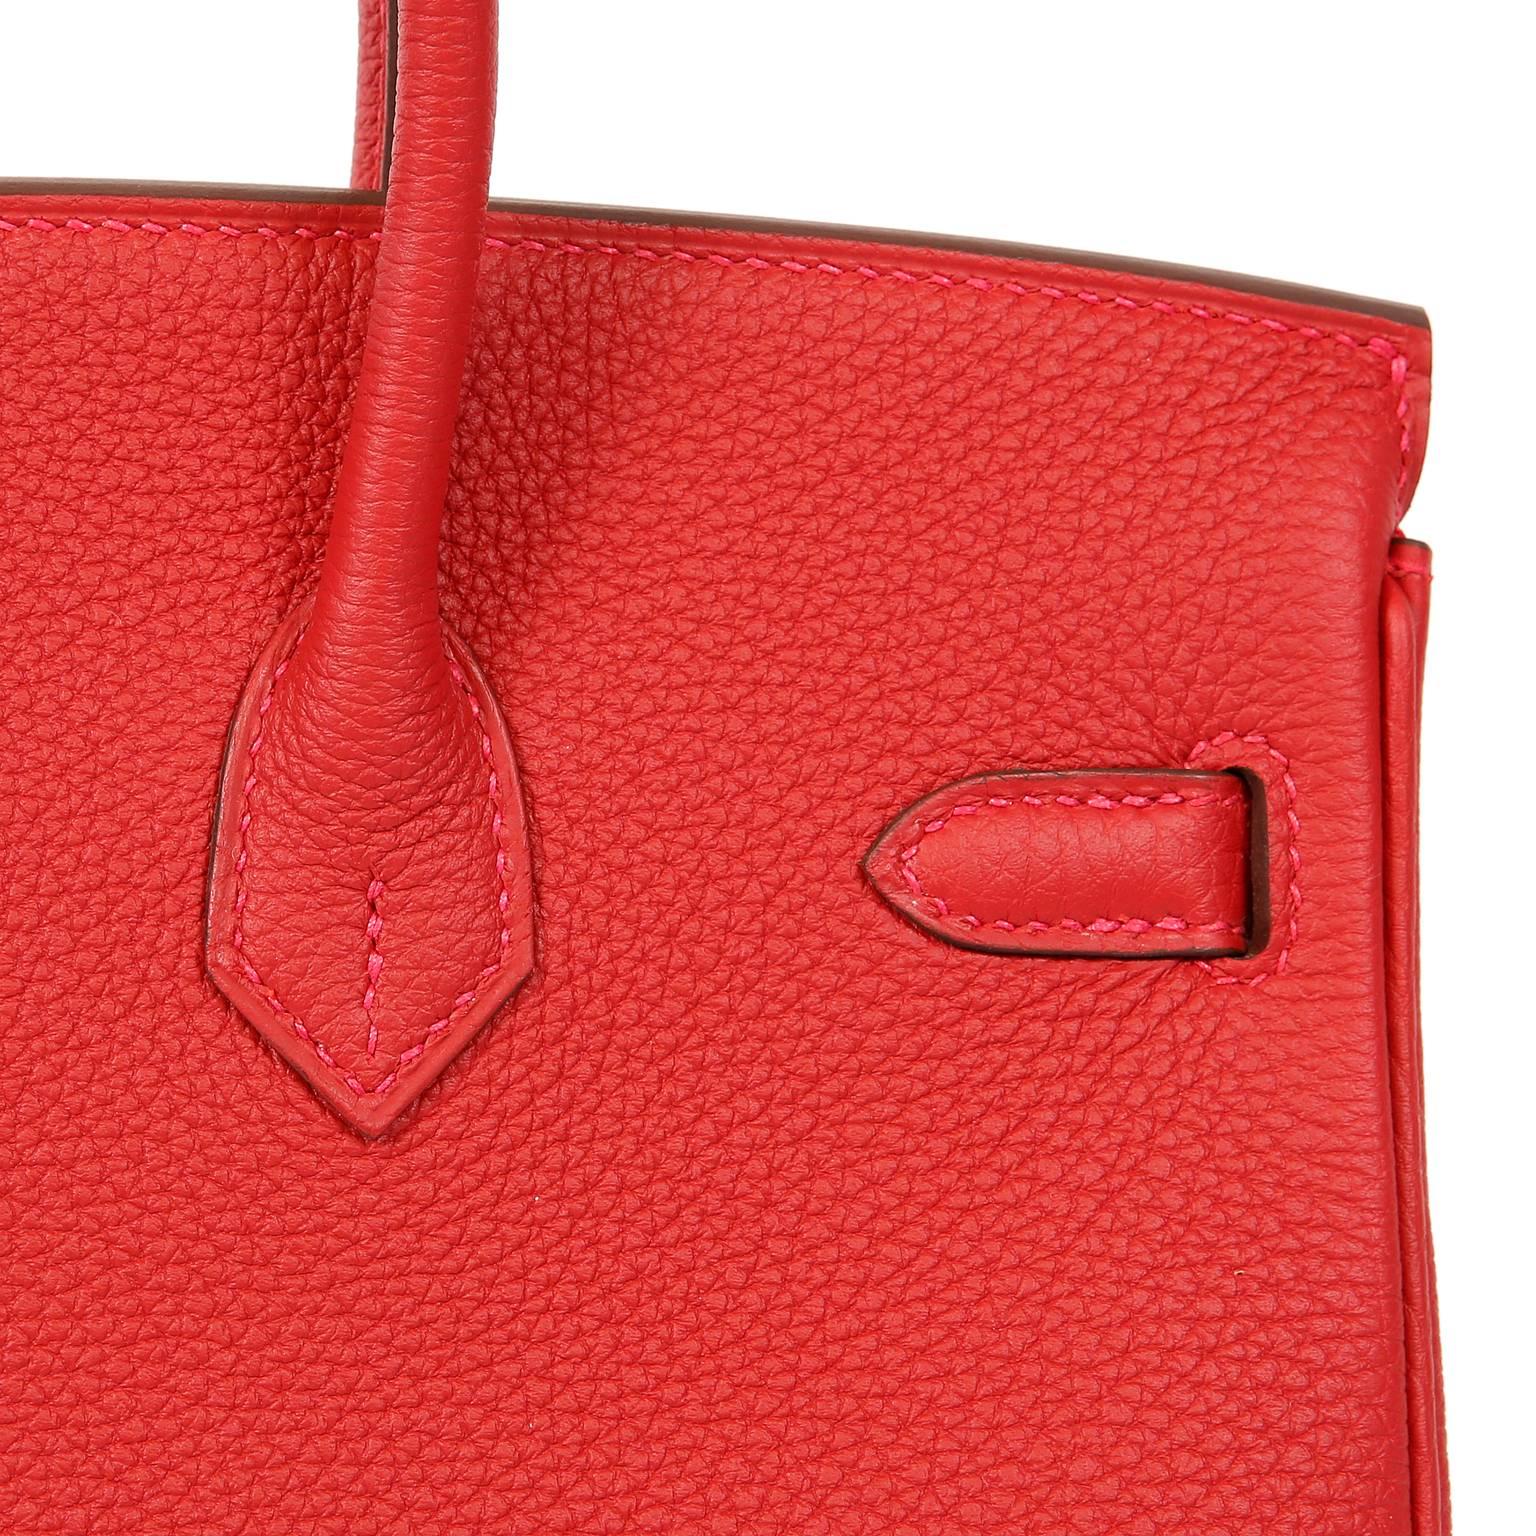 Hermès Rouge Garance Togo 25 cm Birkin Bag- Gold Hardware 5